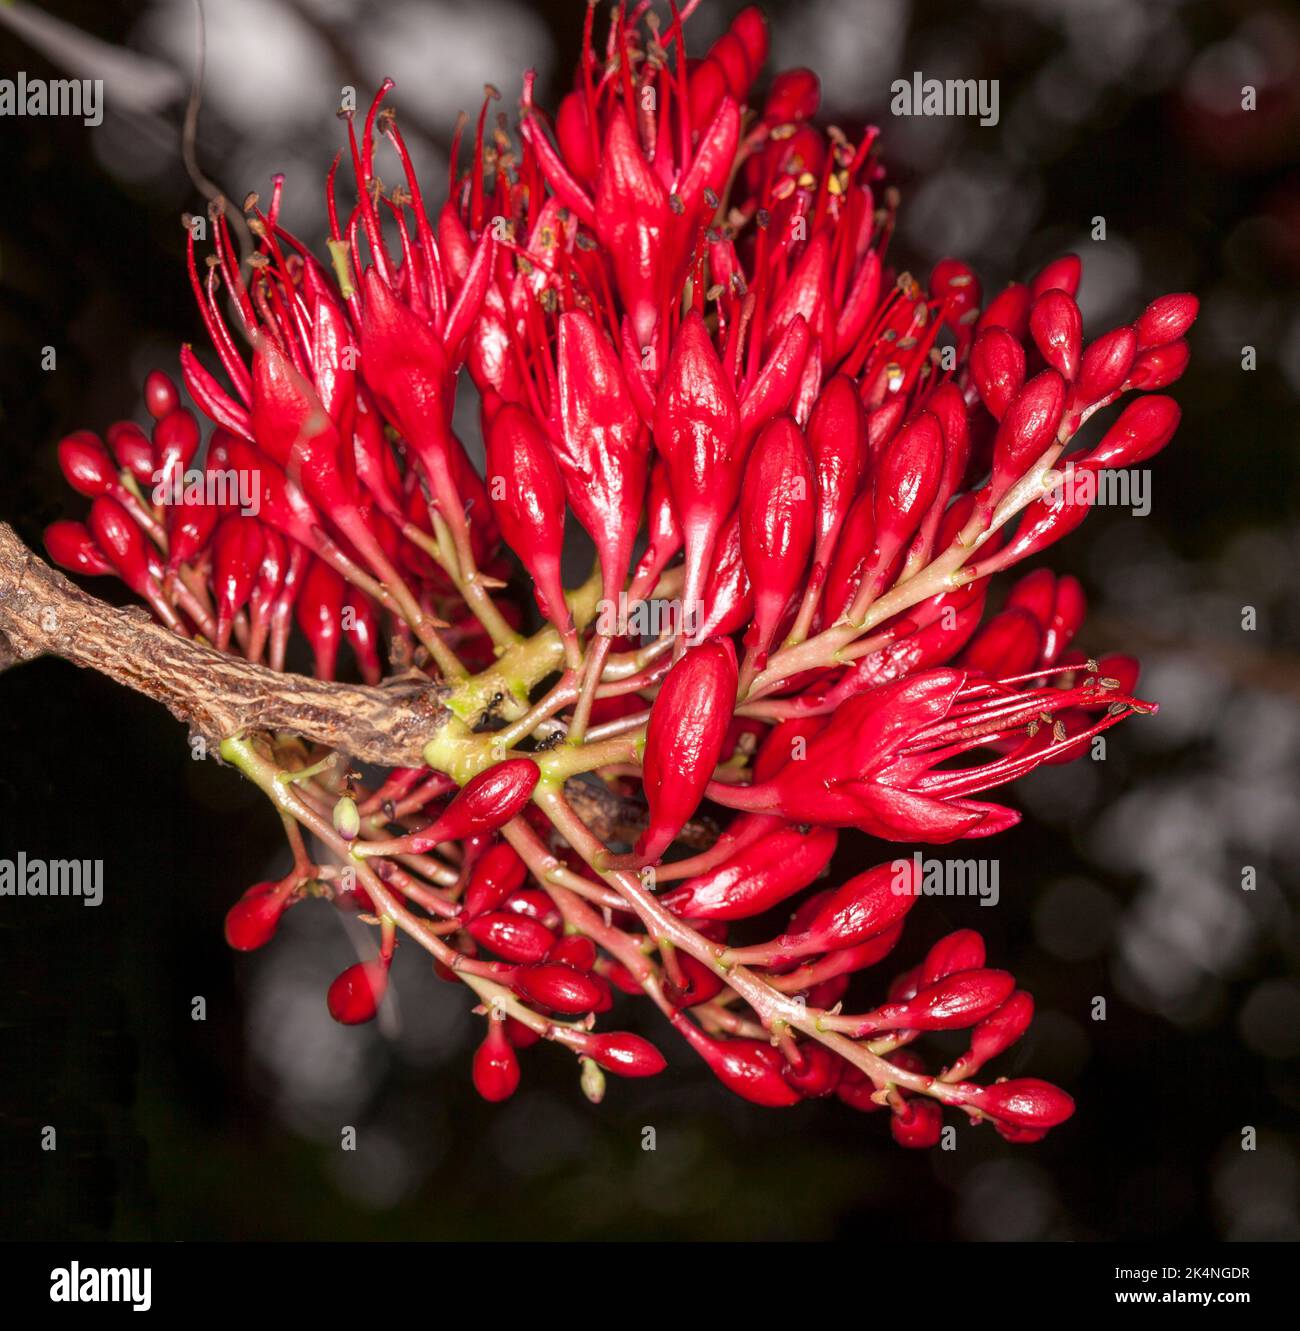 Cluster of vivid red flowers of Schotia brachypetala, Drunken Parrot Tree / Weeping Boer Bean, African tree growing in Australia Stock Photo